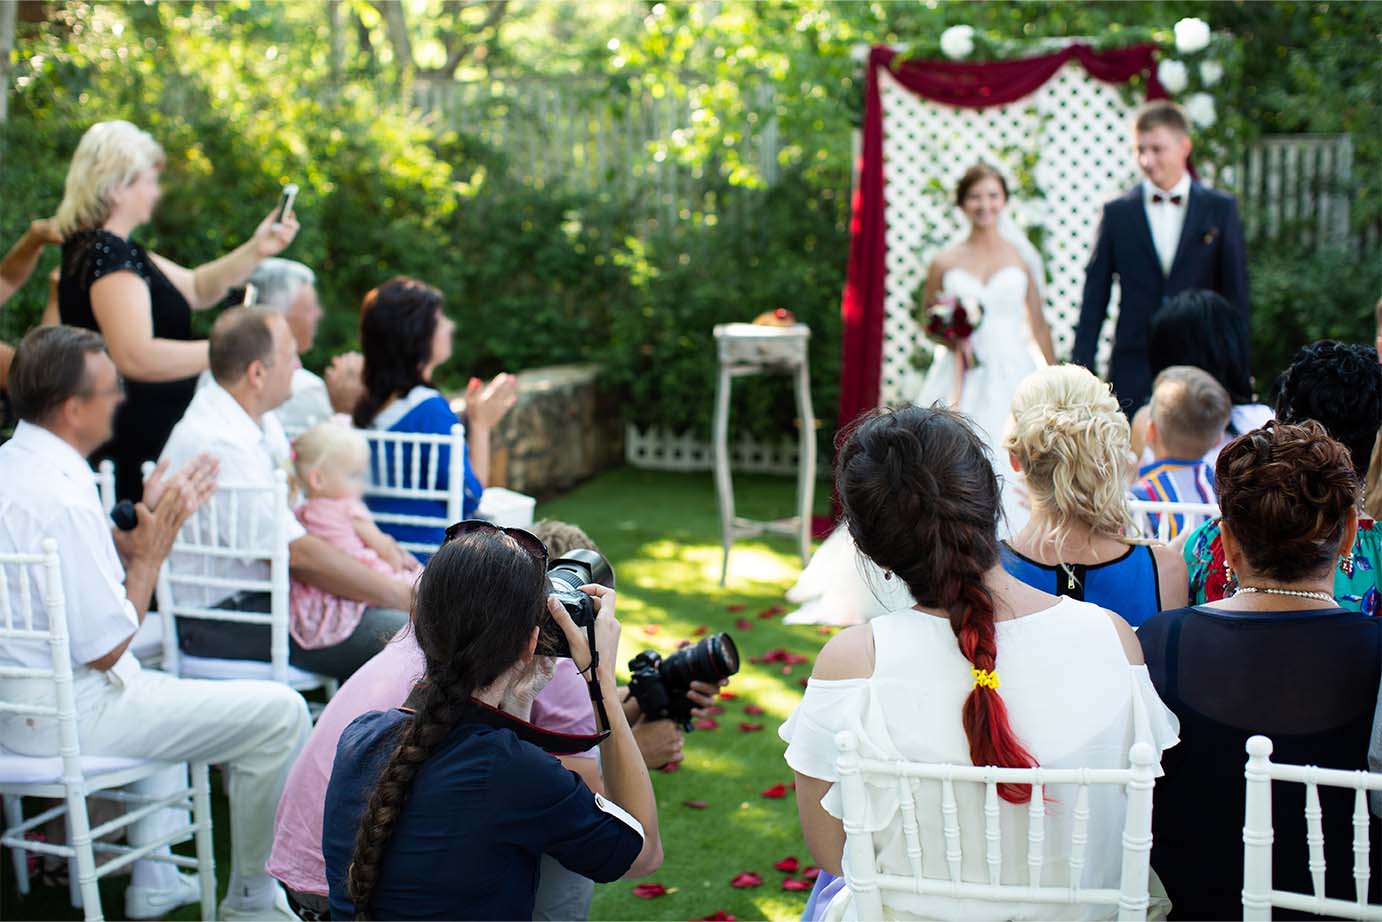 seo for wedding photographers